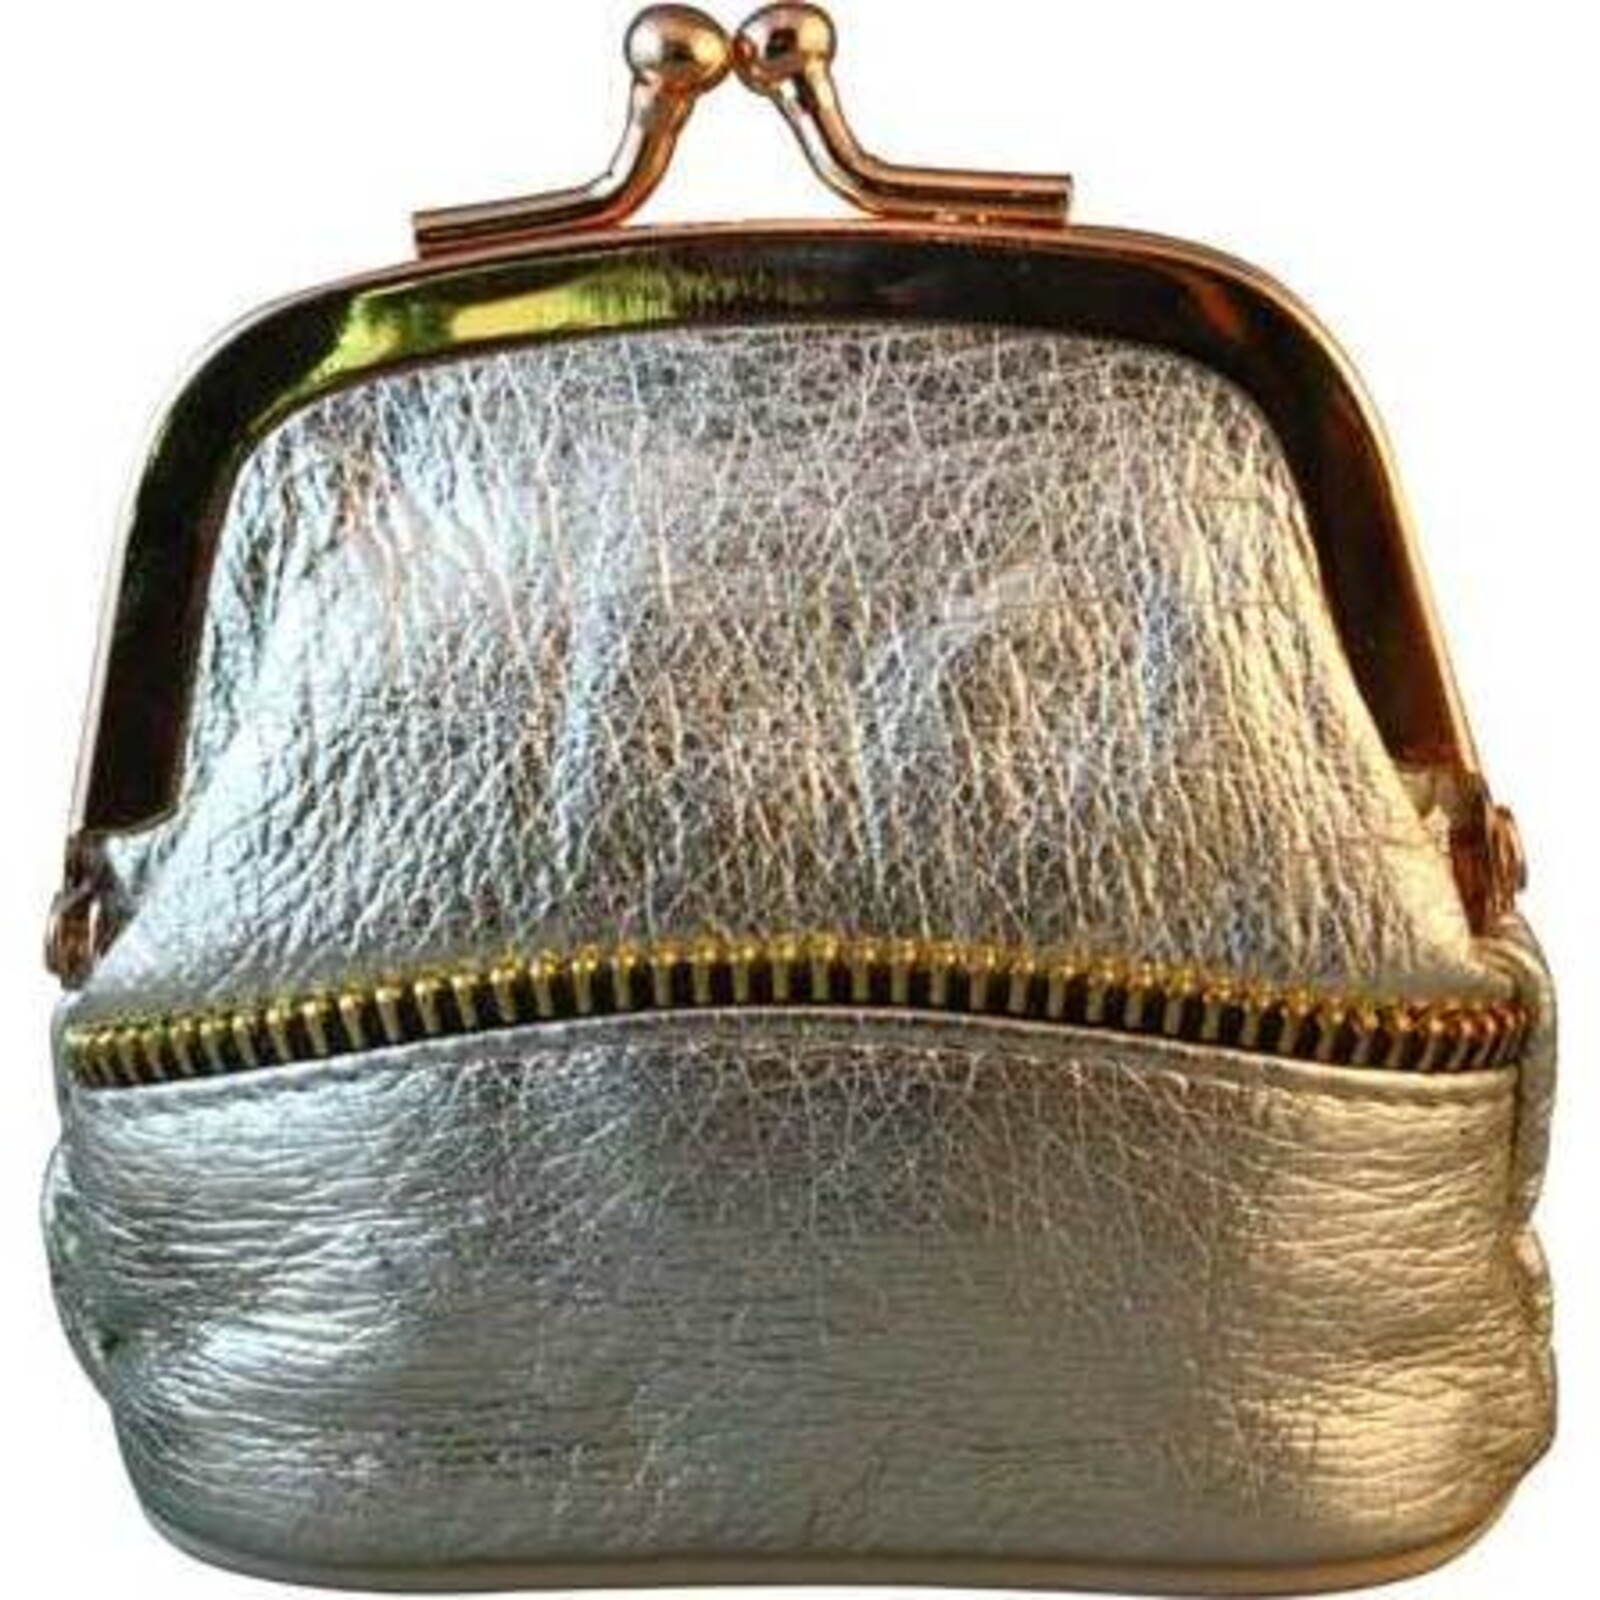 Leather Zipper Purse - Silver